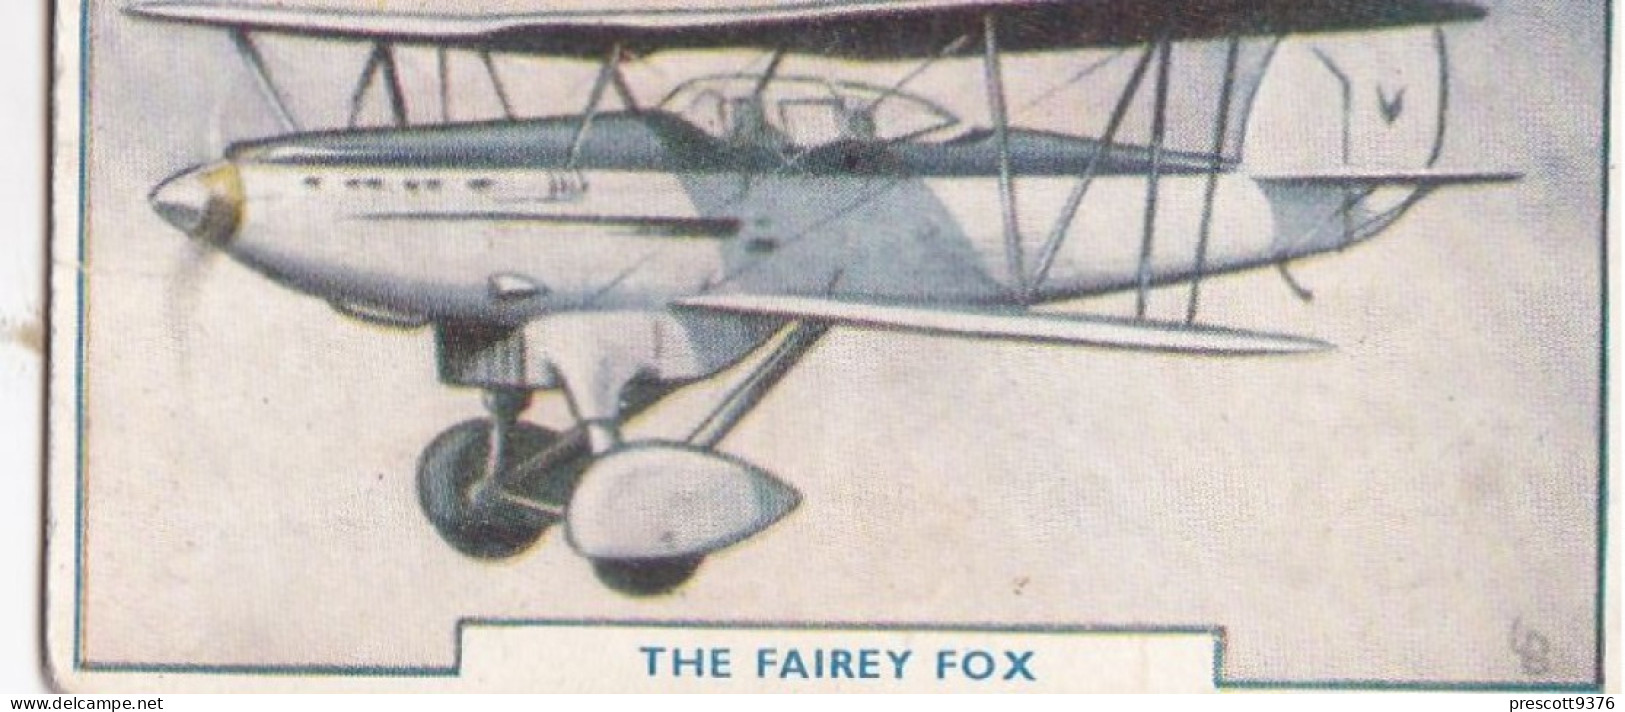 12 Fairey Fox - Aircraft Series 1938 - Godfrey Phillips Cigarette Card - Original - Military - Phillips / BDV